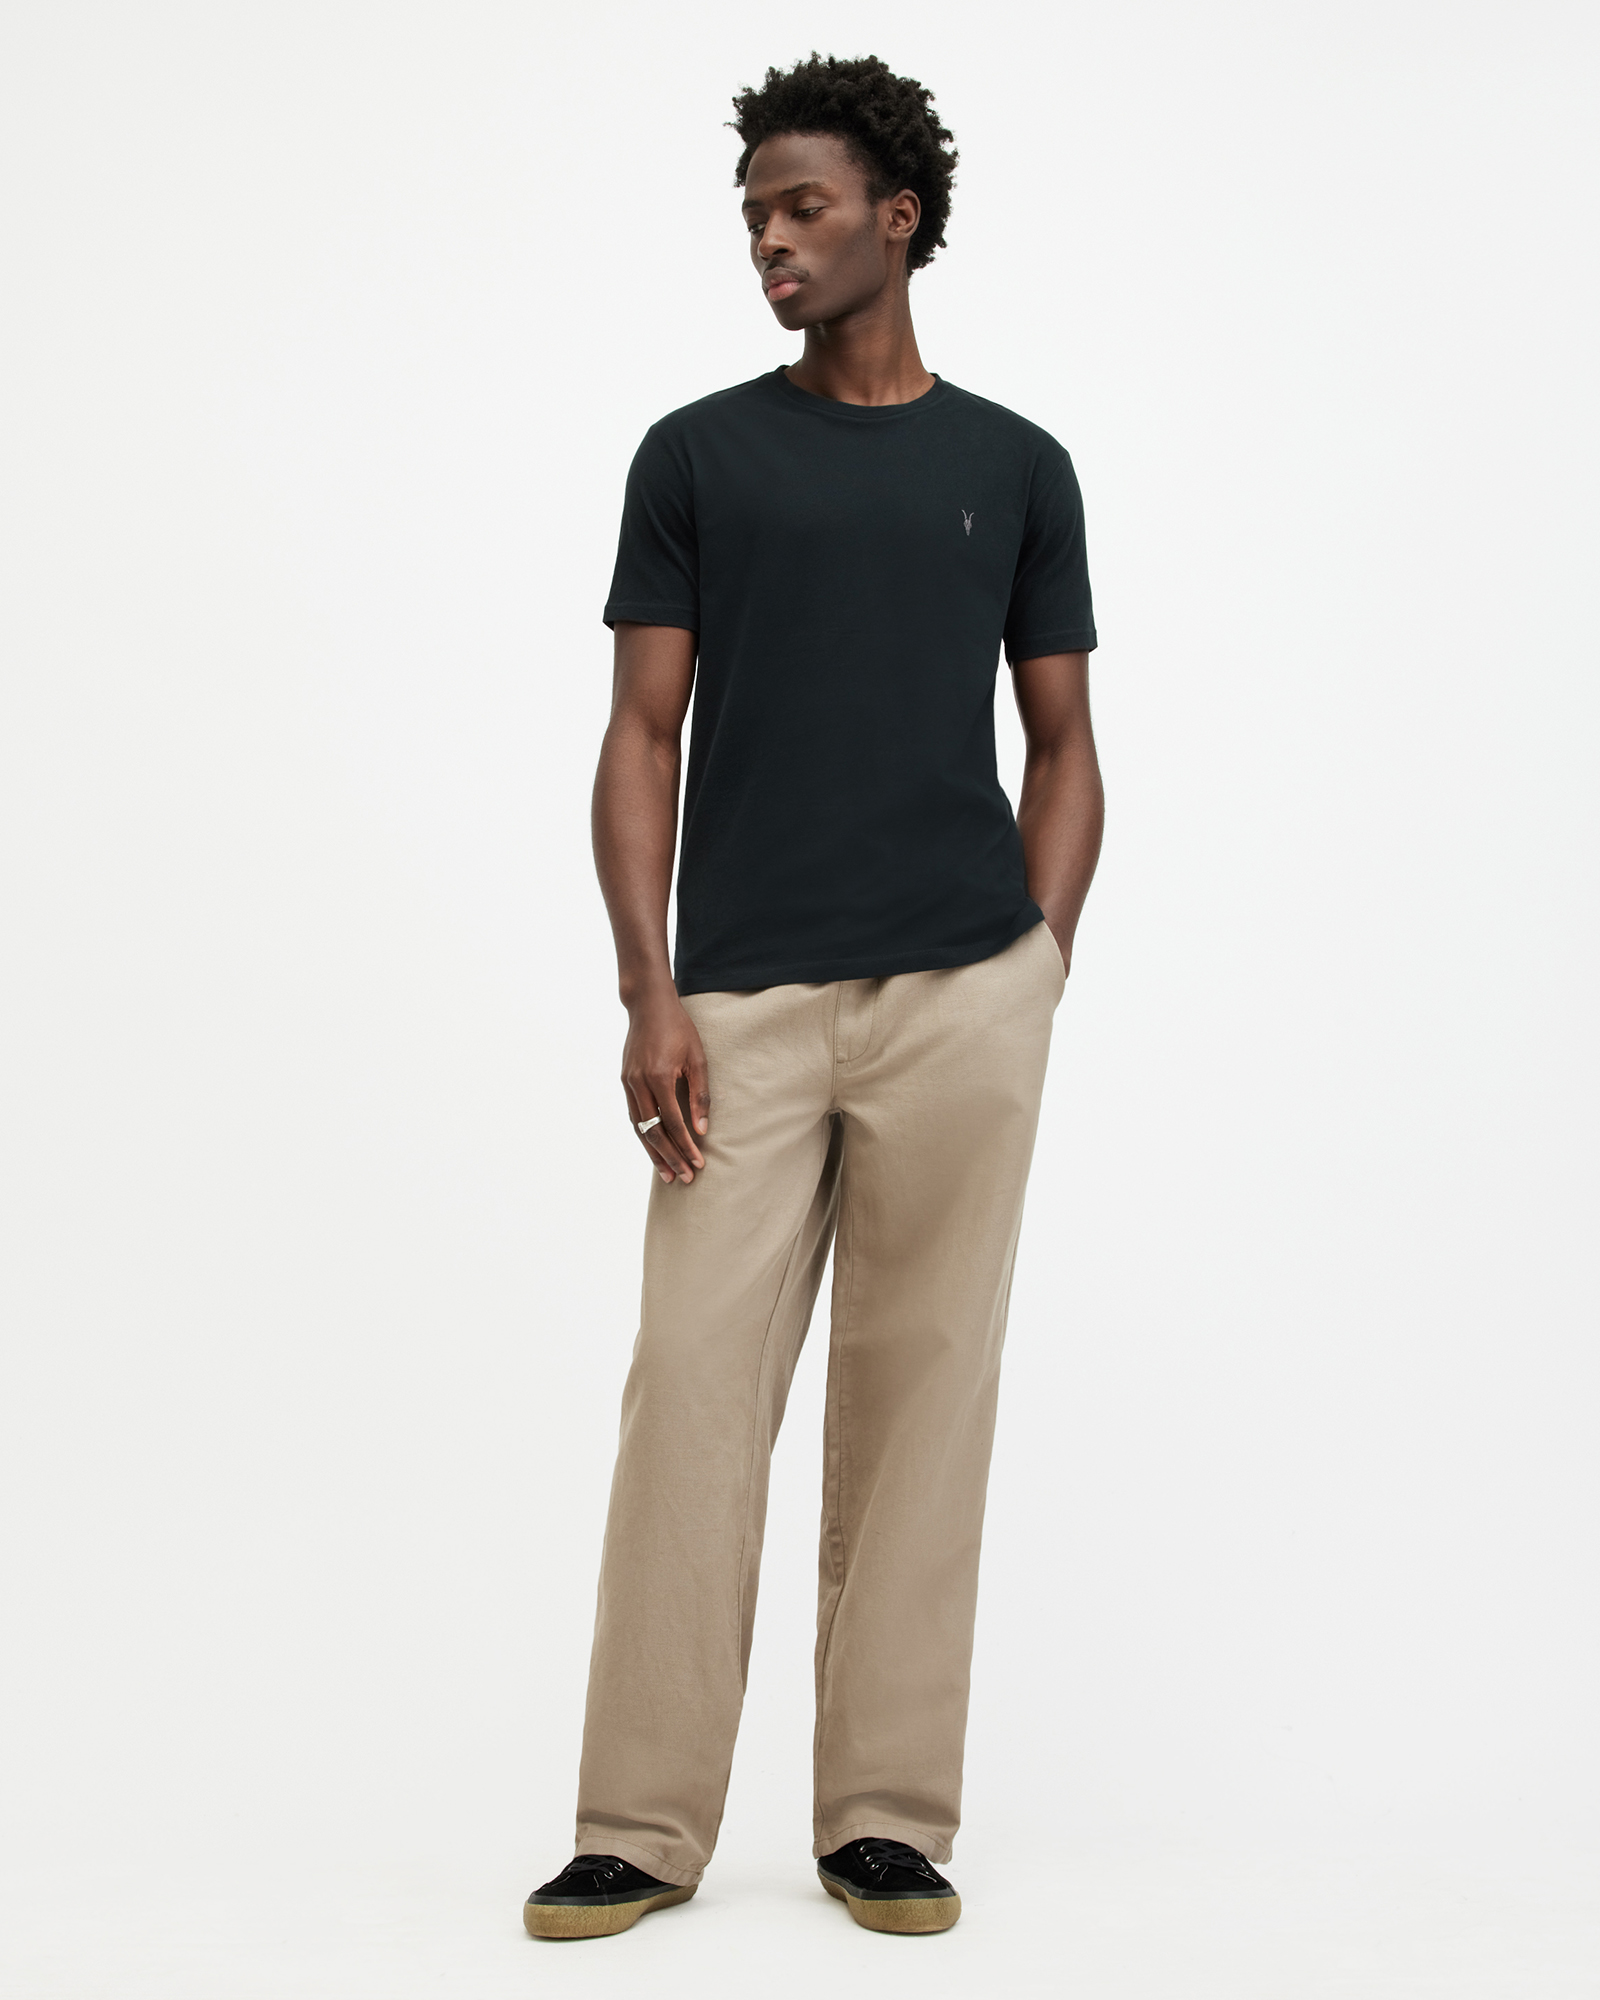 AllSaints Men's Cotton Regular Fit Brace Tonic Short Sleeve Crew T-Shirt, Black, Size: XXL